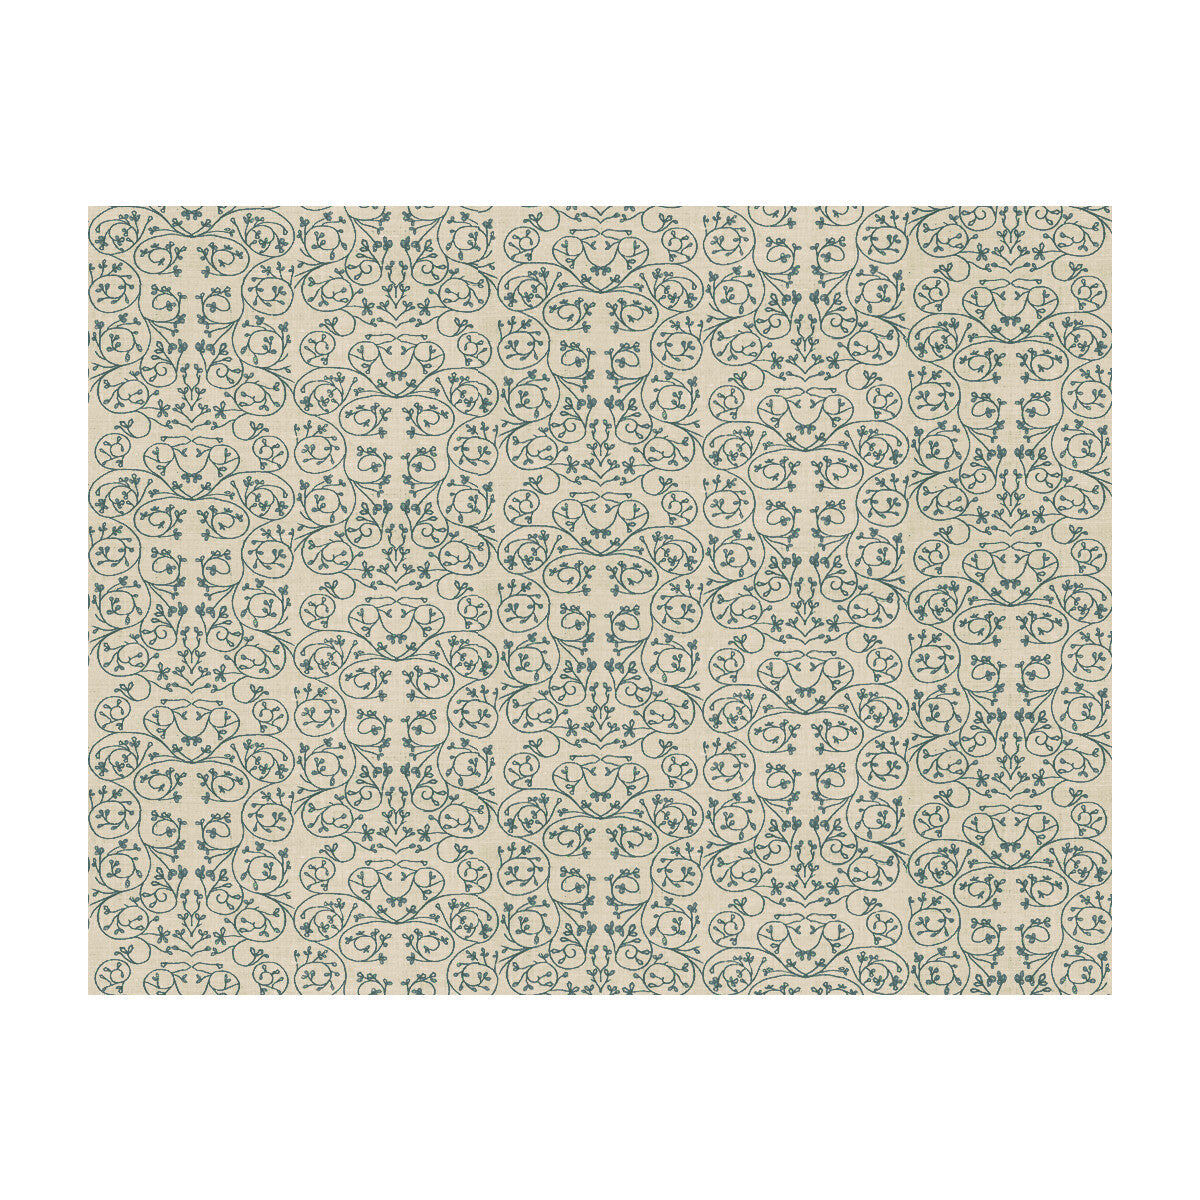 Garden fabric in cornflower color - pattern GWF-3511.5.0 - by Lee Jofa Modern in the Allegra Hicks Garden collection